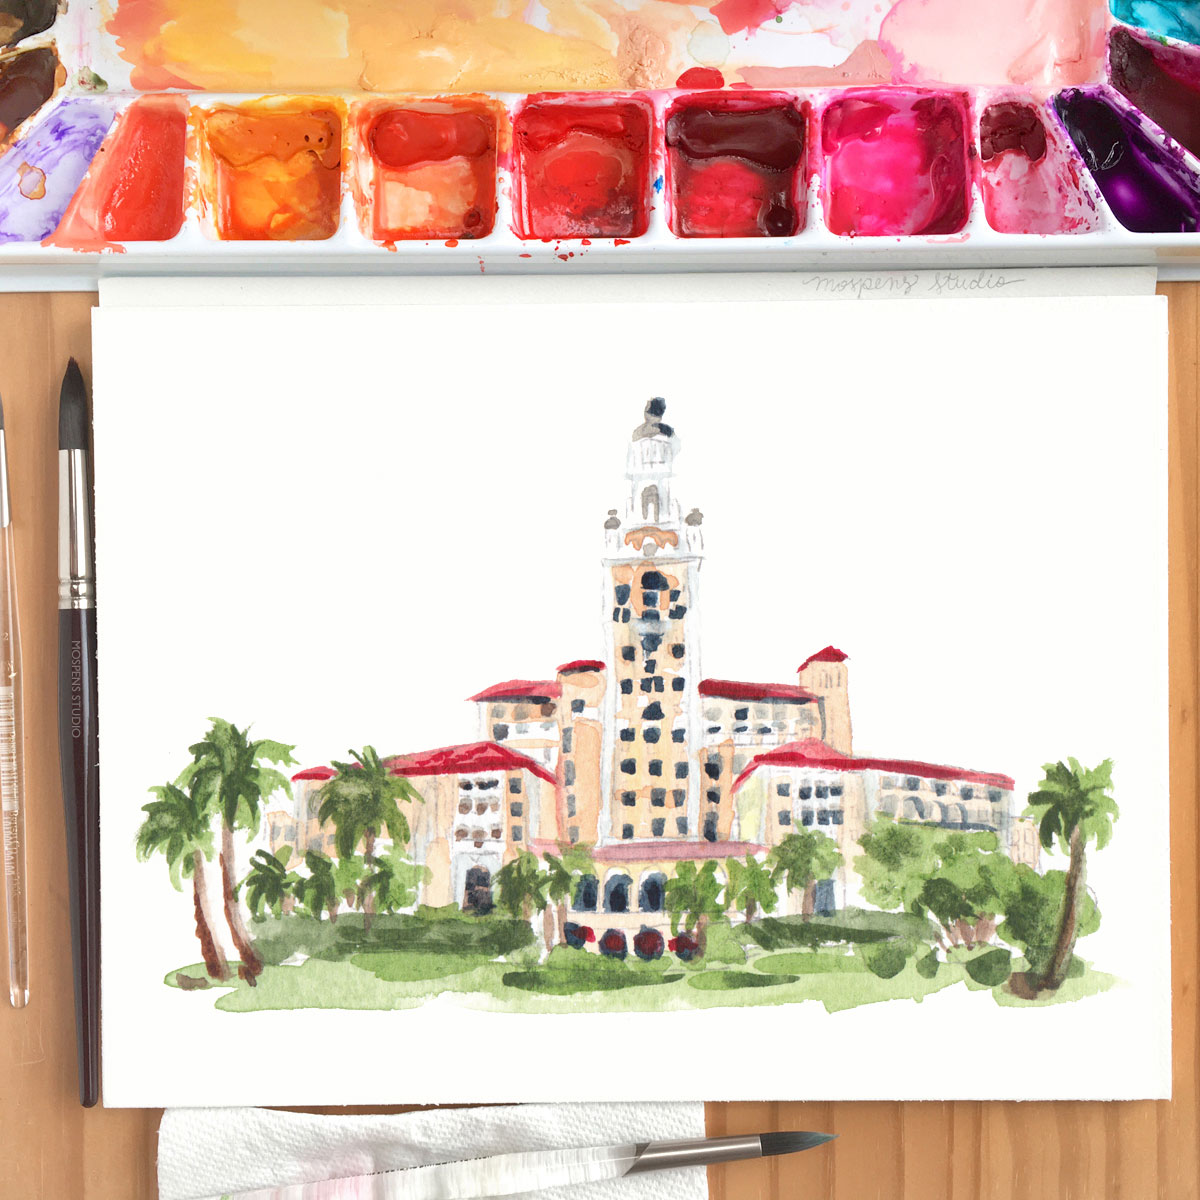 Watercolor Biltmore Hotel in Miami Florida wedding venue illustration by artist Michelle Mospens. - MospensStudio.com